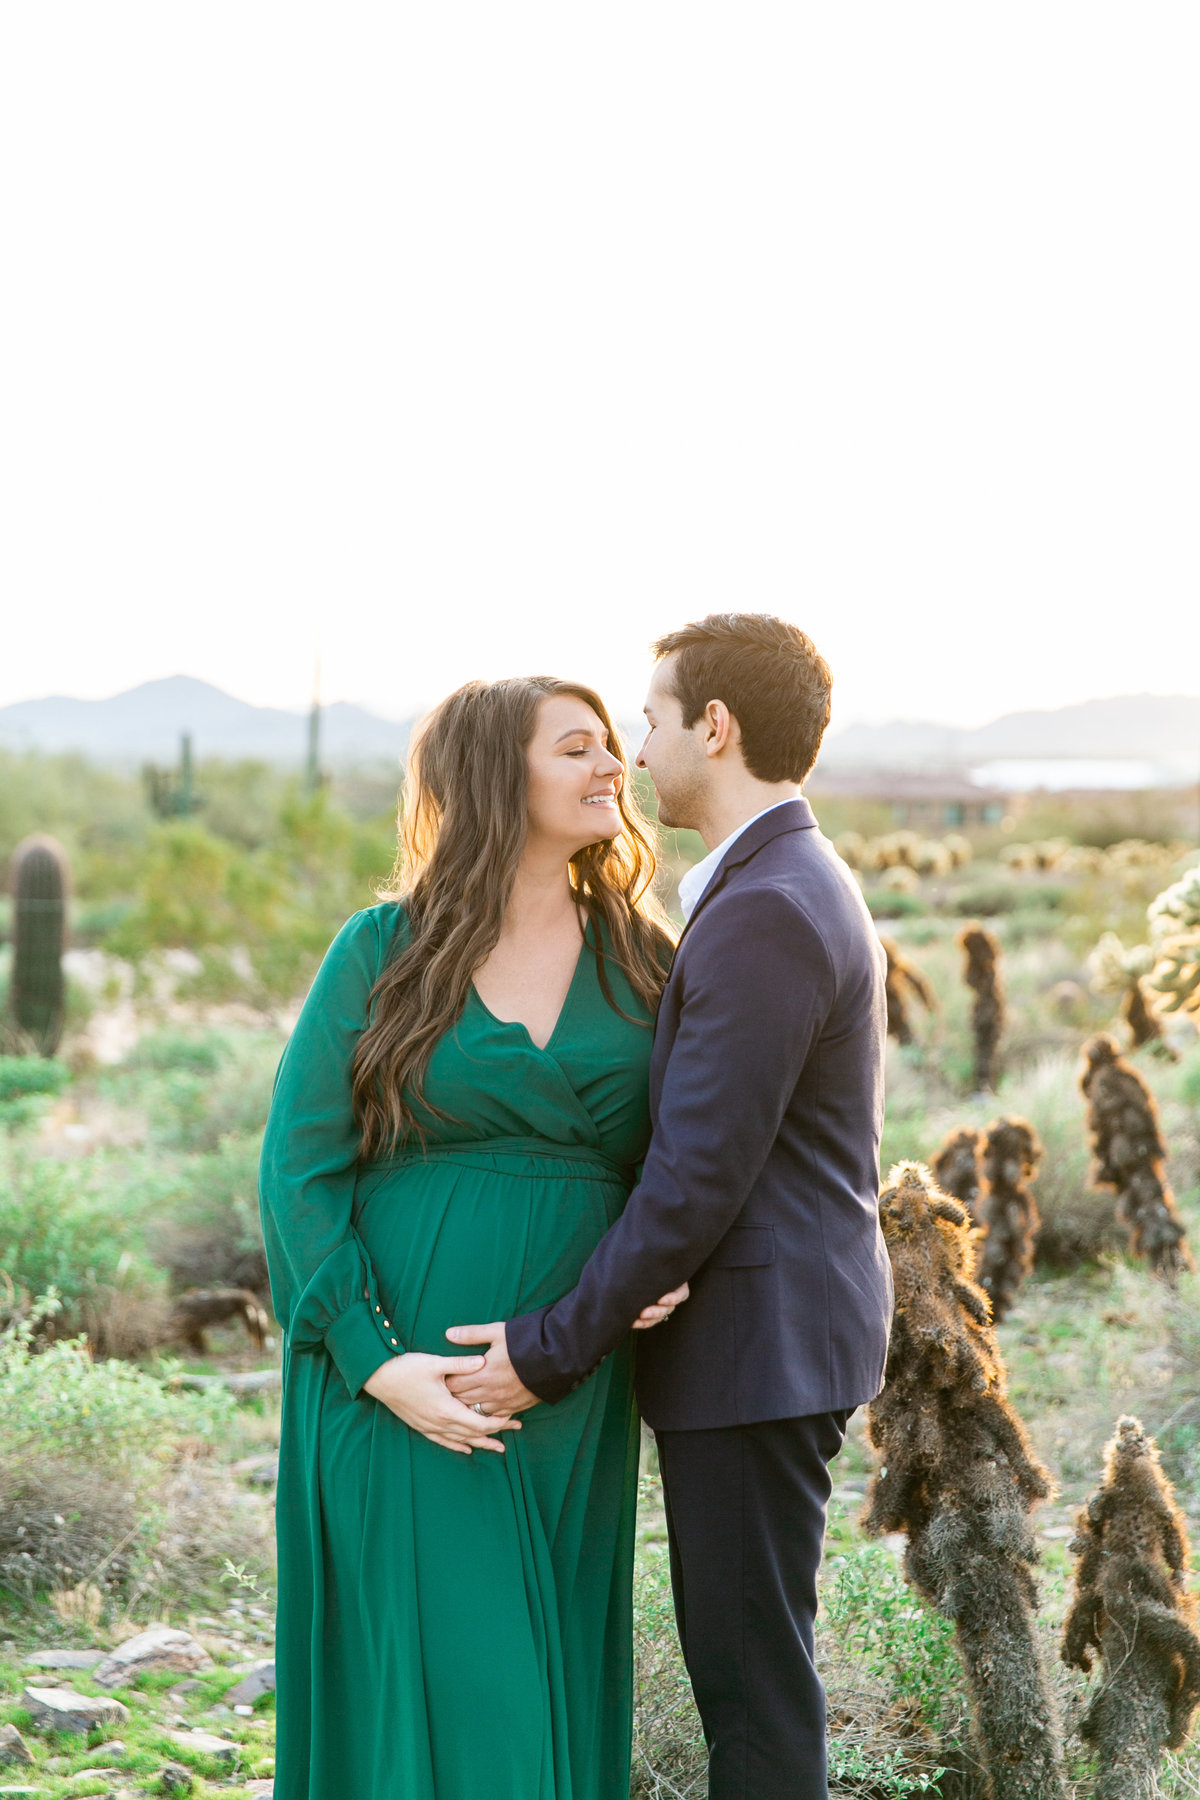 Karlie Colleen Photography - Scottsdale Arizona - Maternity Photos - Shelby & Cris-38